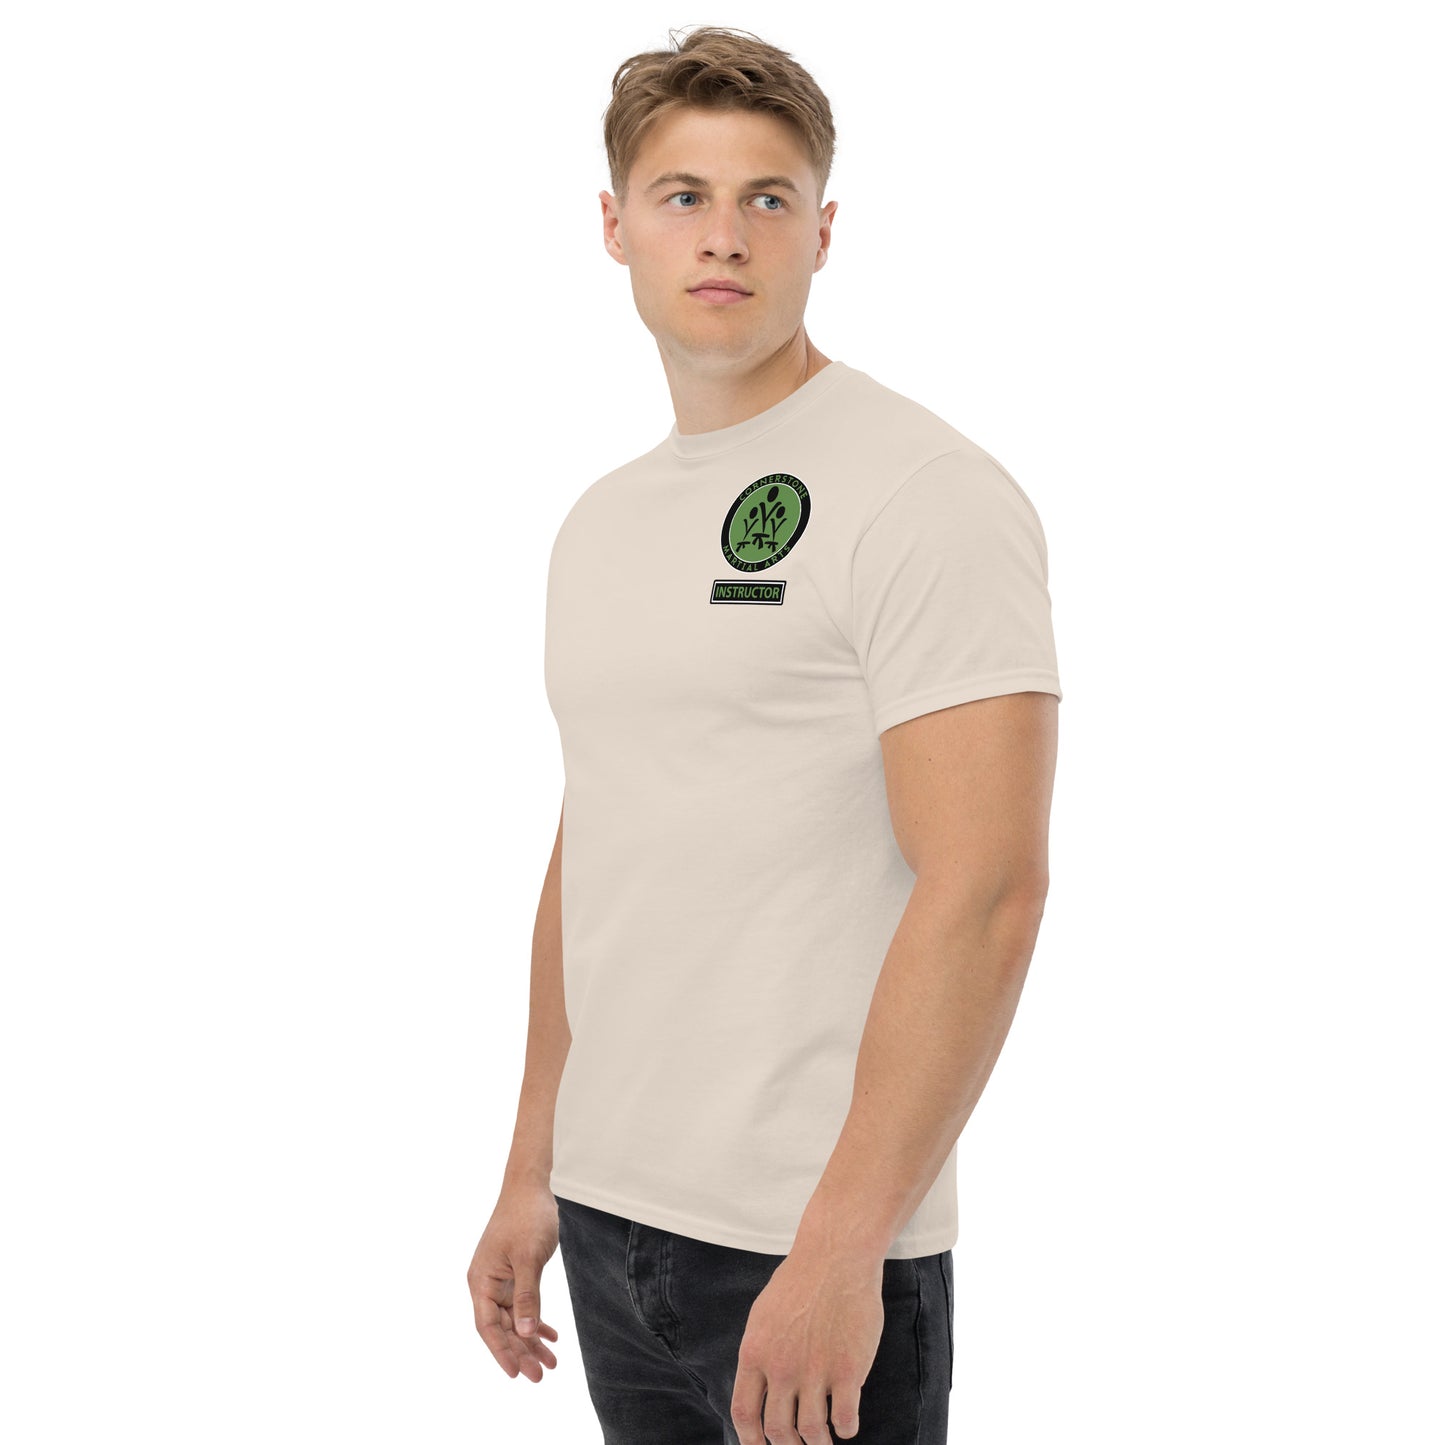 Perseverance - 7 Tenets Instructor Unisex T-Shirt